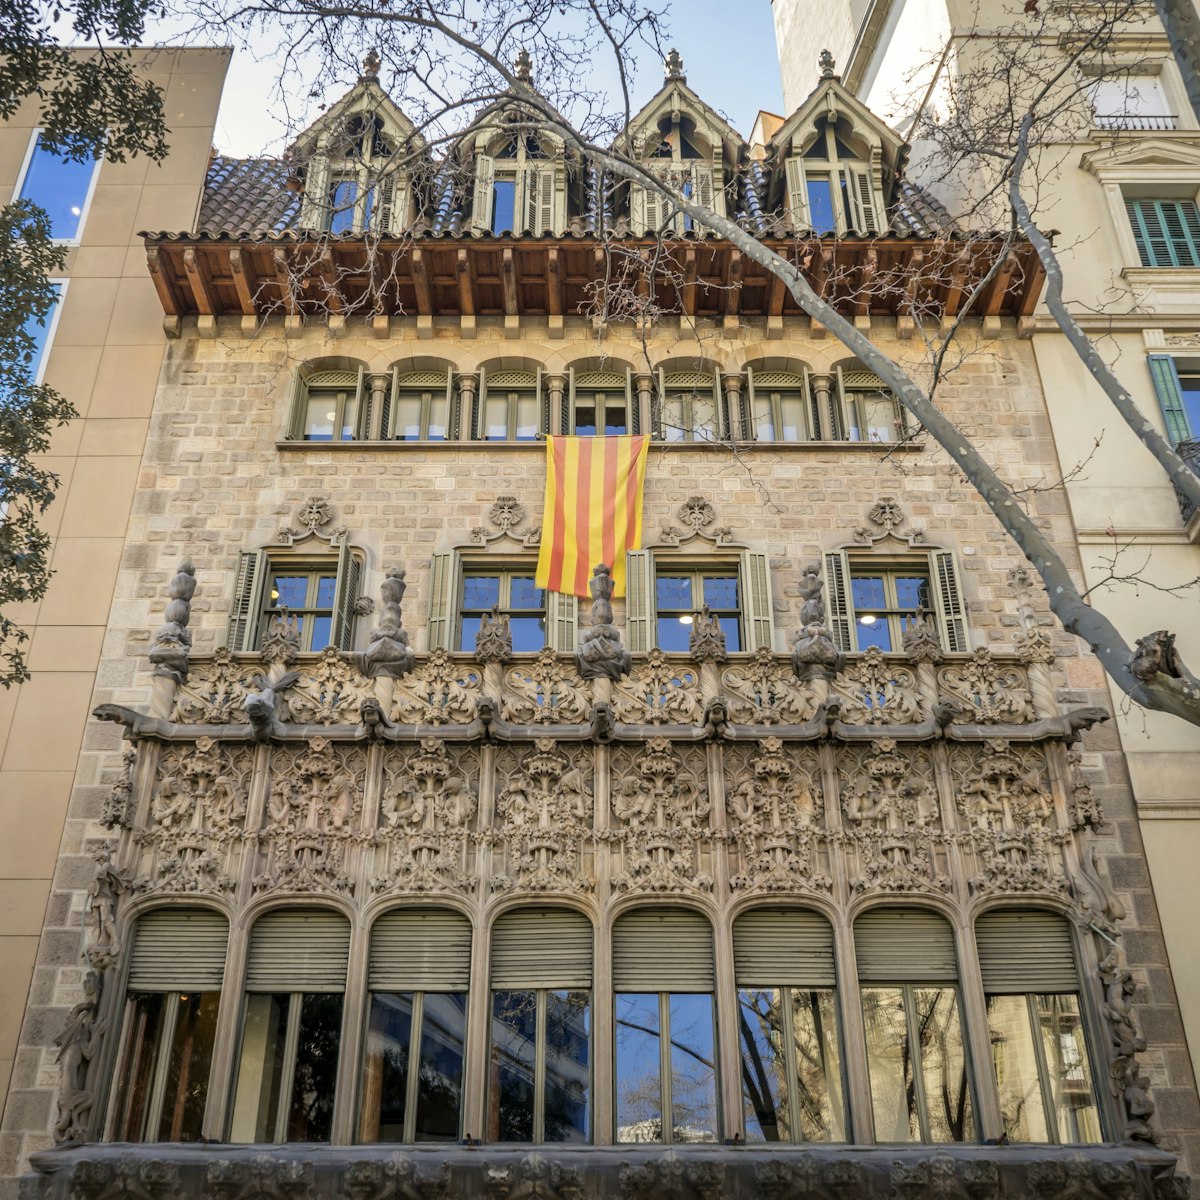 Barcelona, Spain - March 10, 2022 - Palau del Baró de Quadras is a 1906 modernist palace by architect Josep Puig, featuring ornate Gothic Arabesque-inspired details.